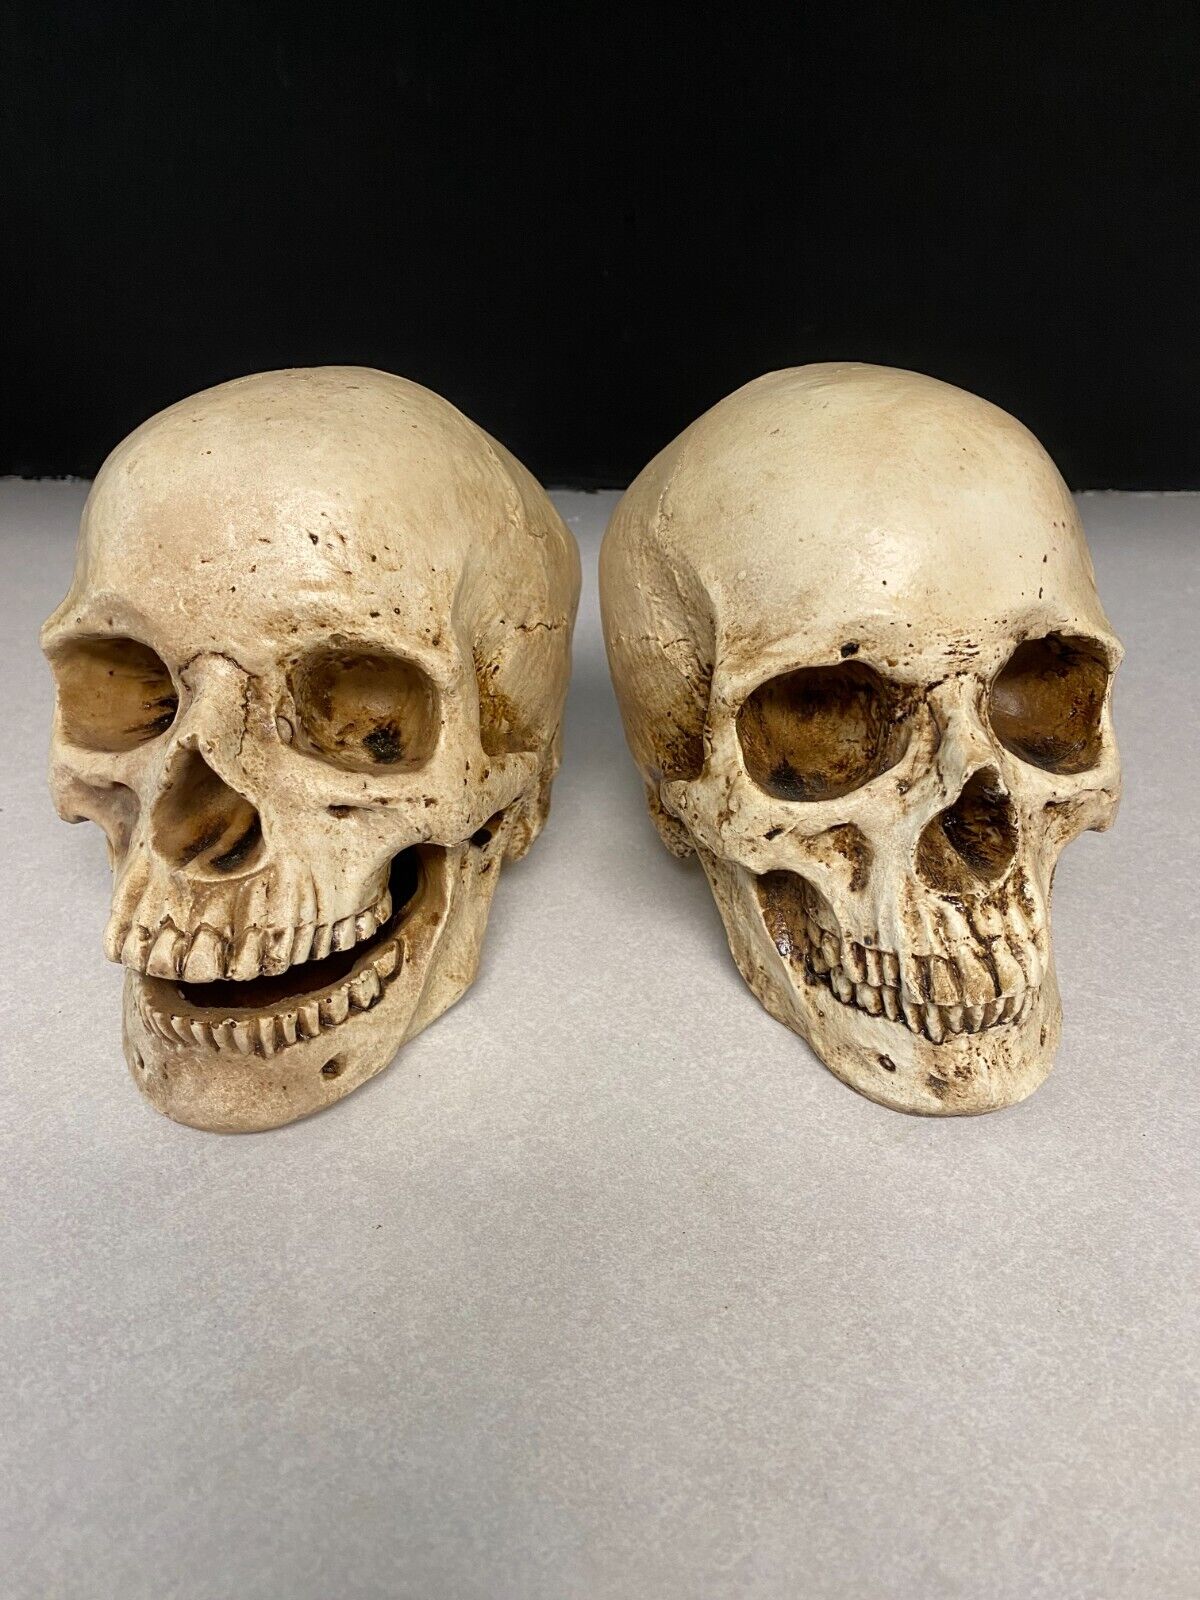 Pair of Human life sized Skull Resin Models